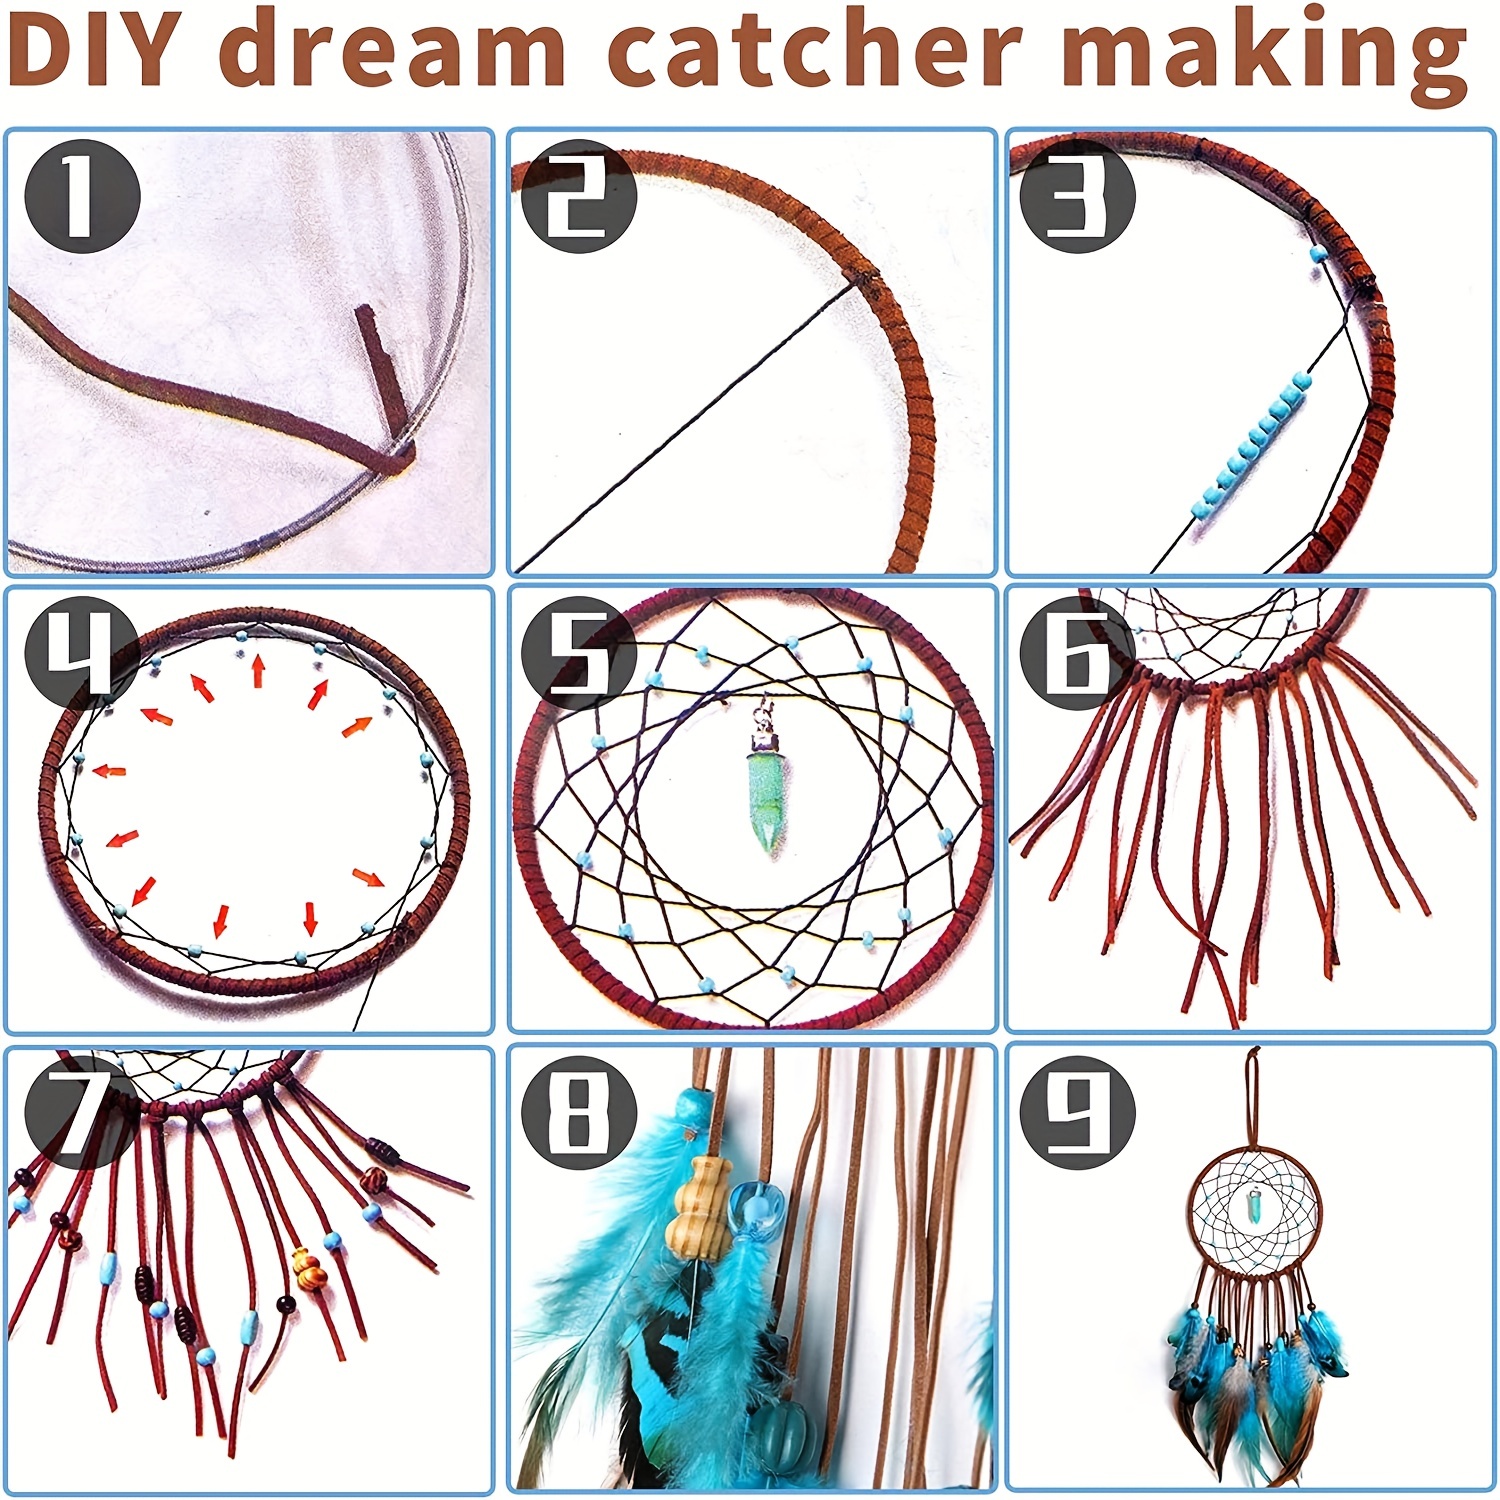 Dream catcher craft kit | Dreamcatcher's House